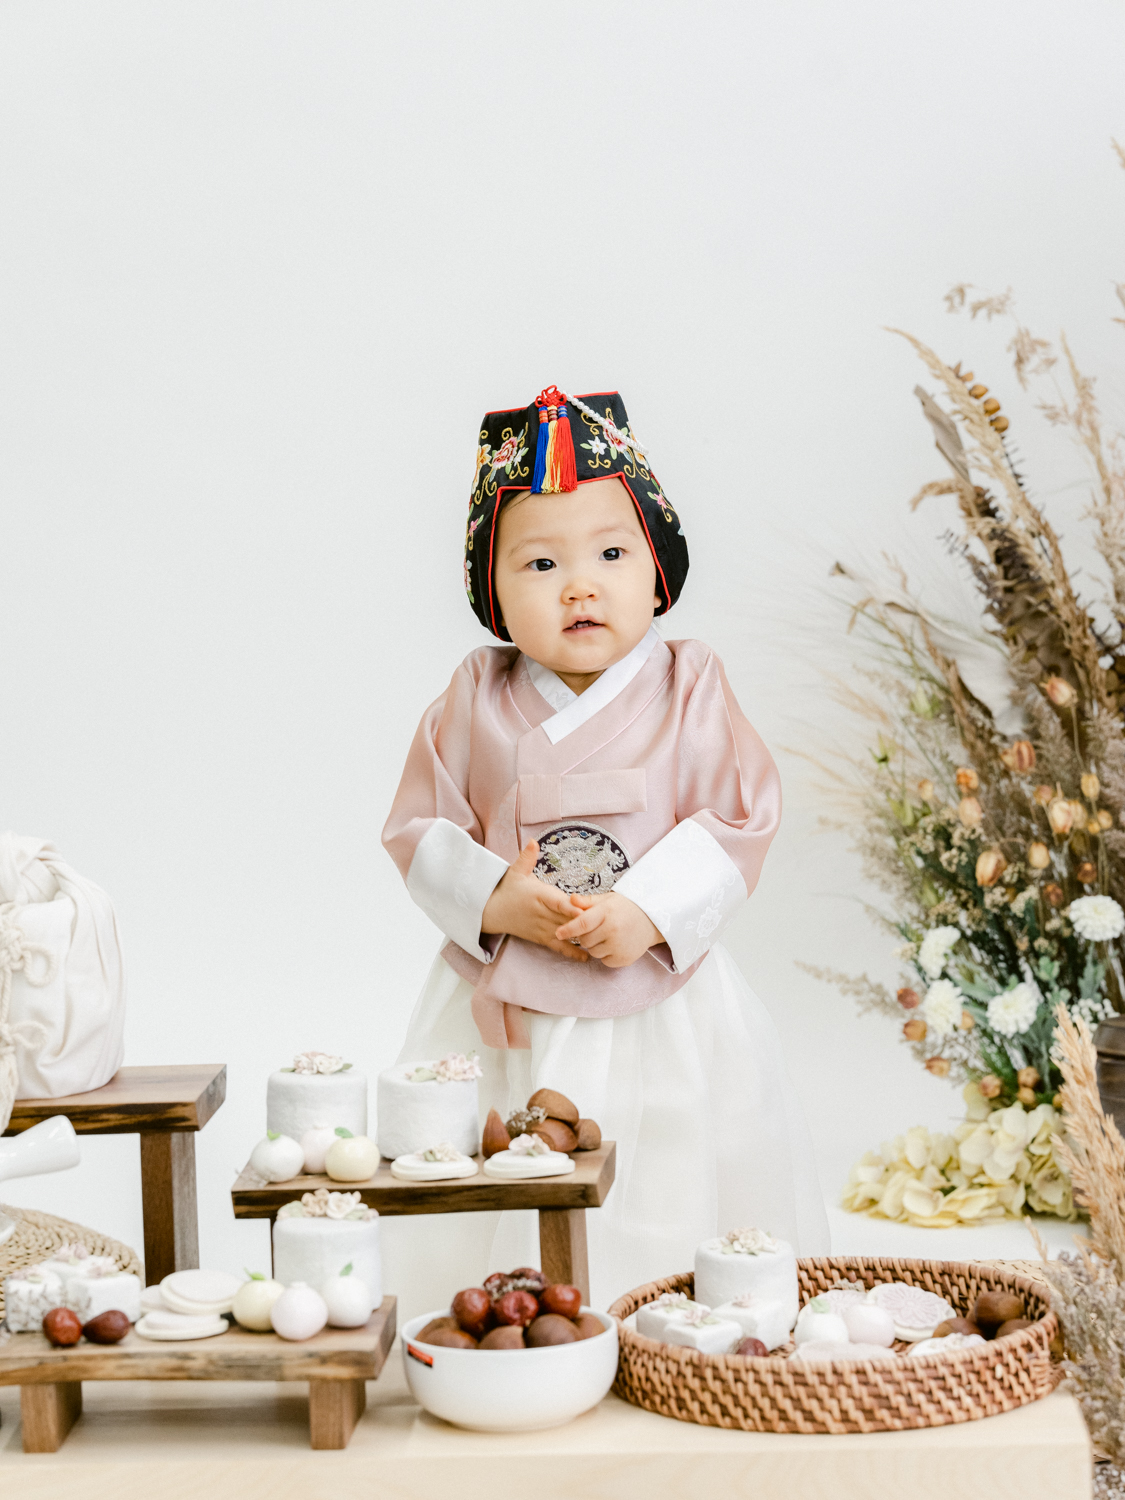 Why Take Family Photos in Hanbok